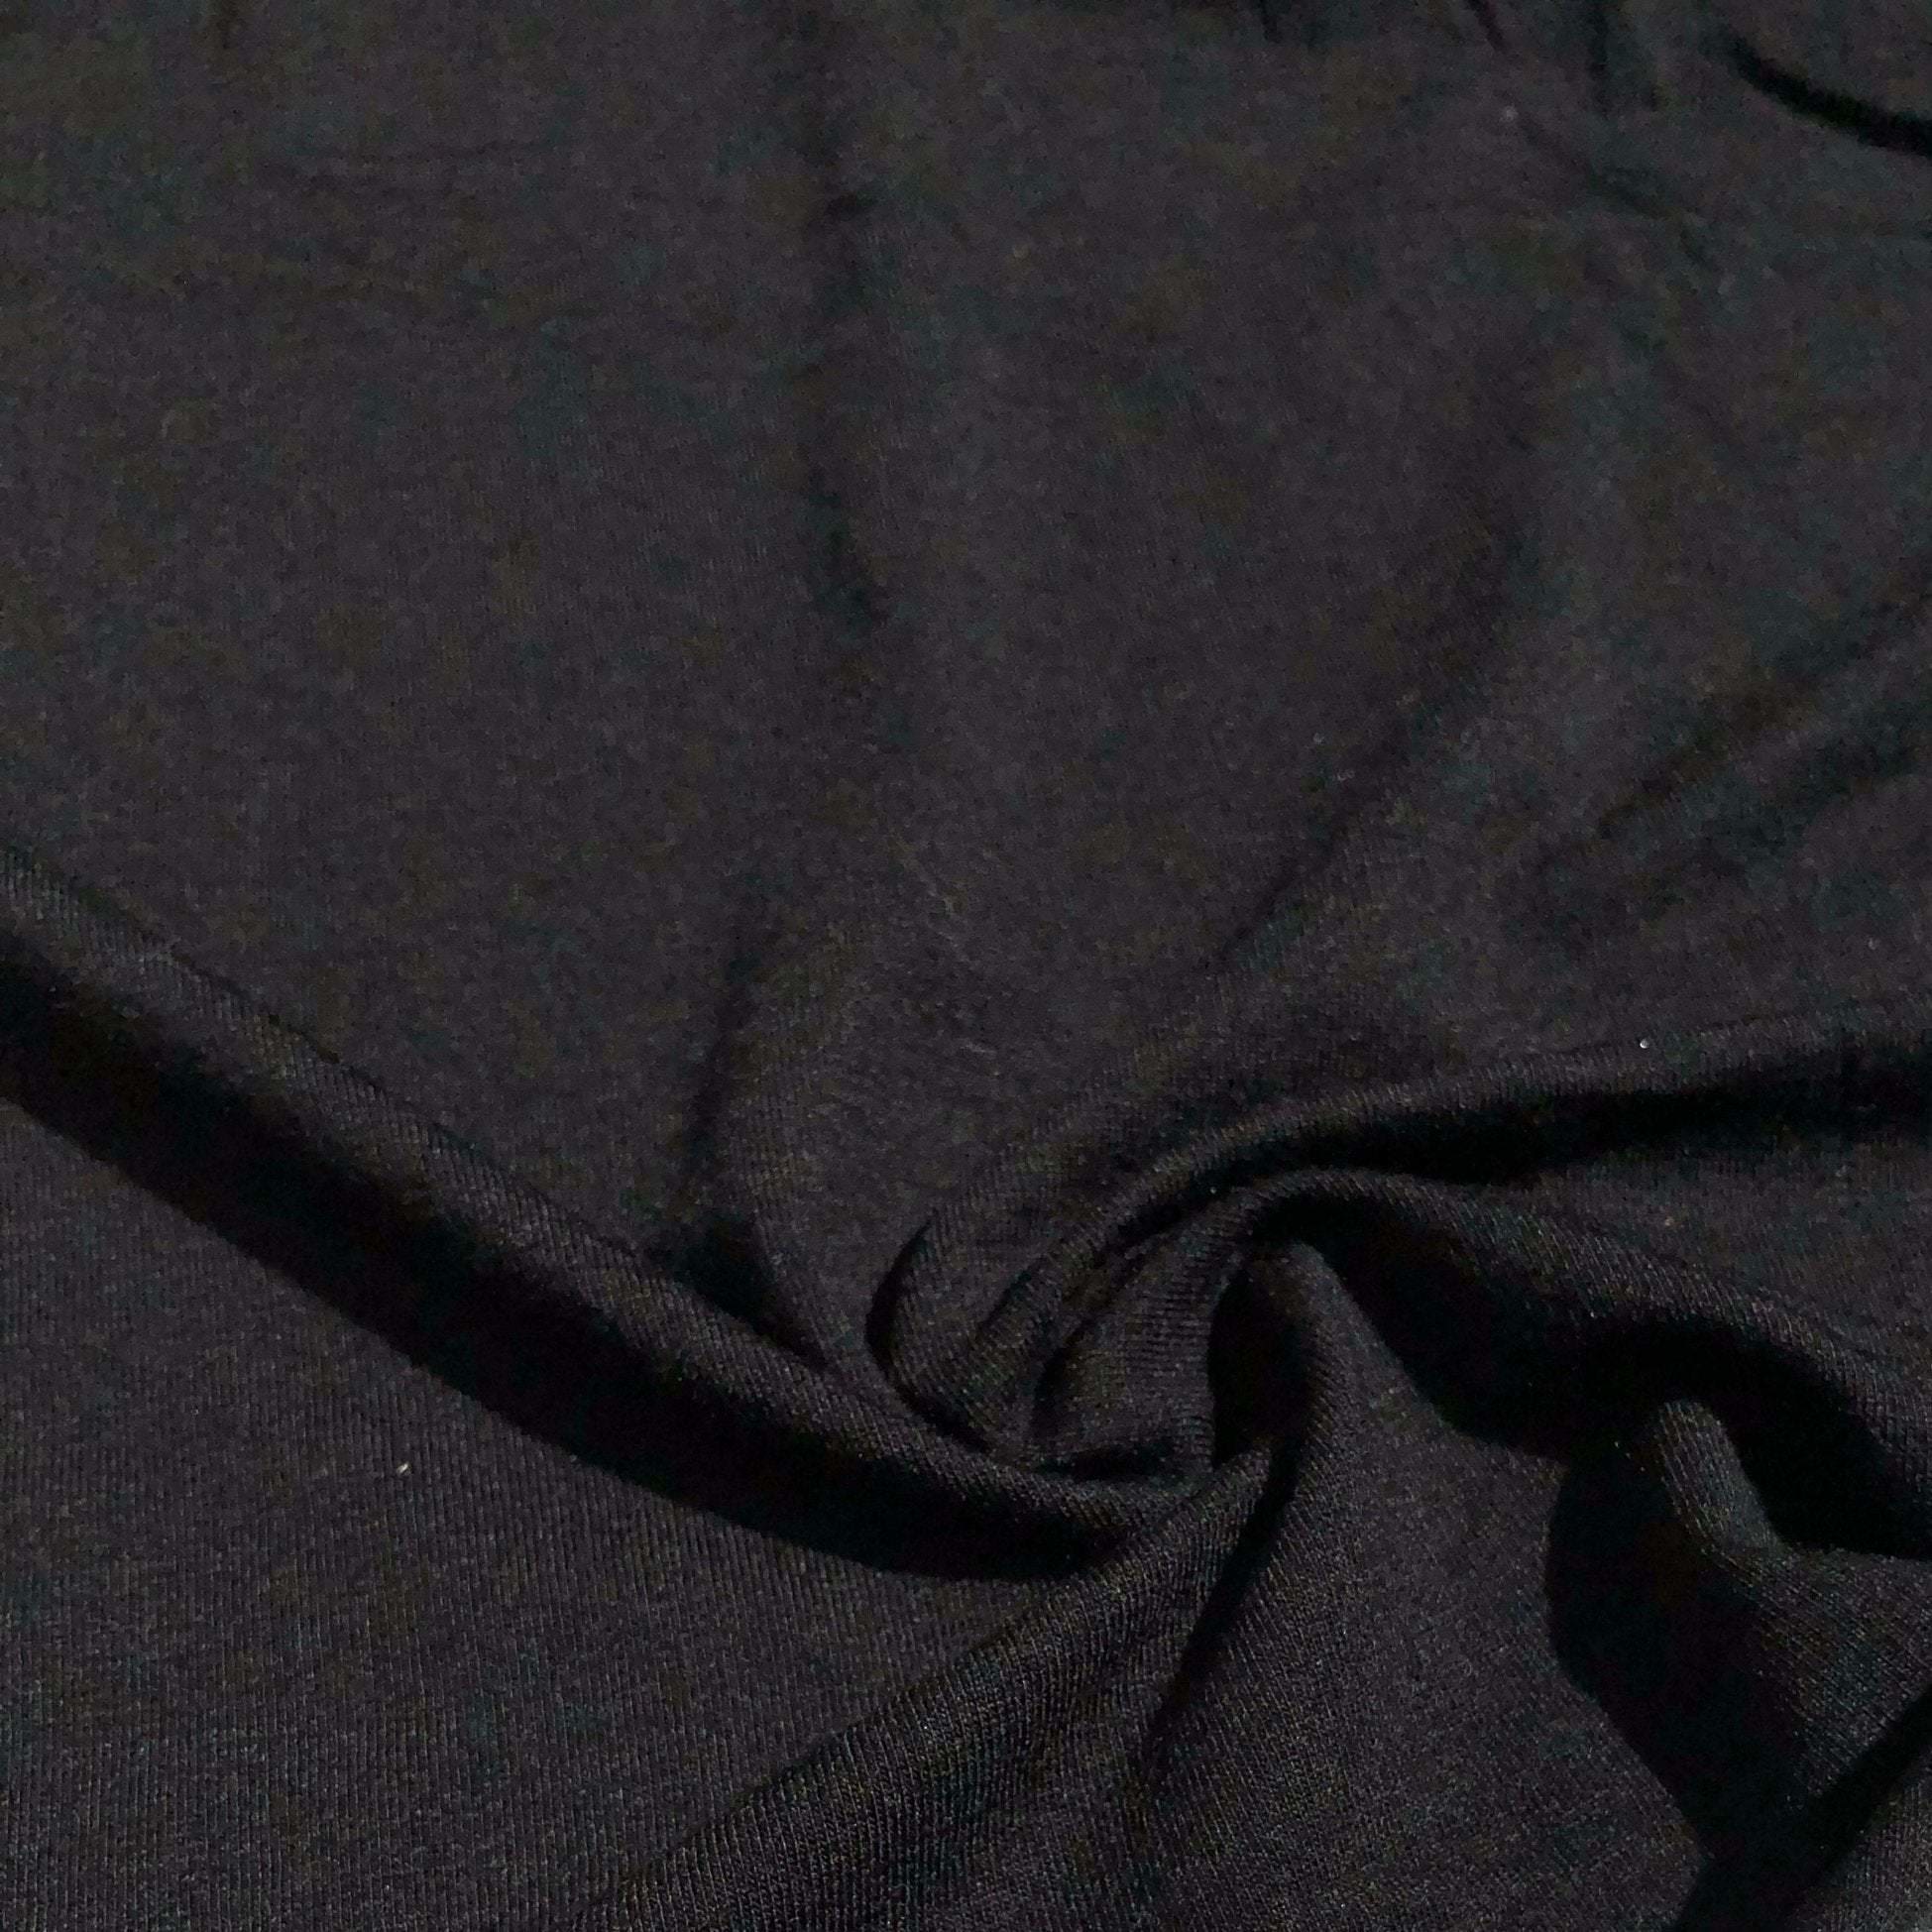 Cali Fabrics Black Stretch Crepe Knit #27346 Fabric by the Yard